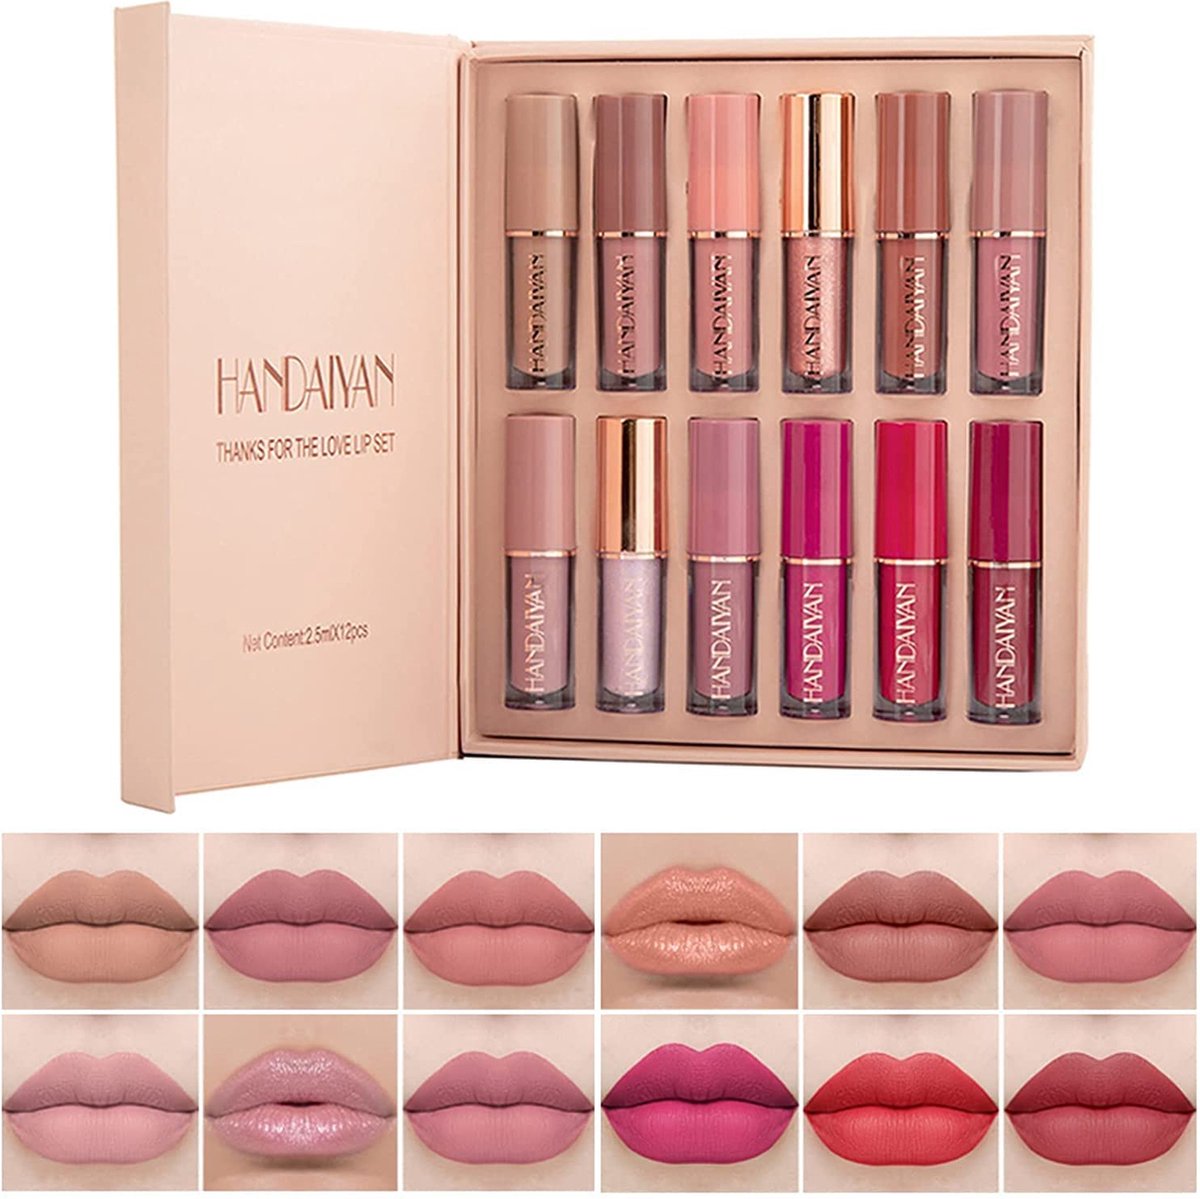 12 kleuren matte lippenstiftset, fluwelen lipglossset met matte finish, hydraterende lippenstift met geschenkdoos